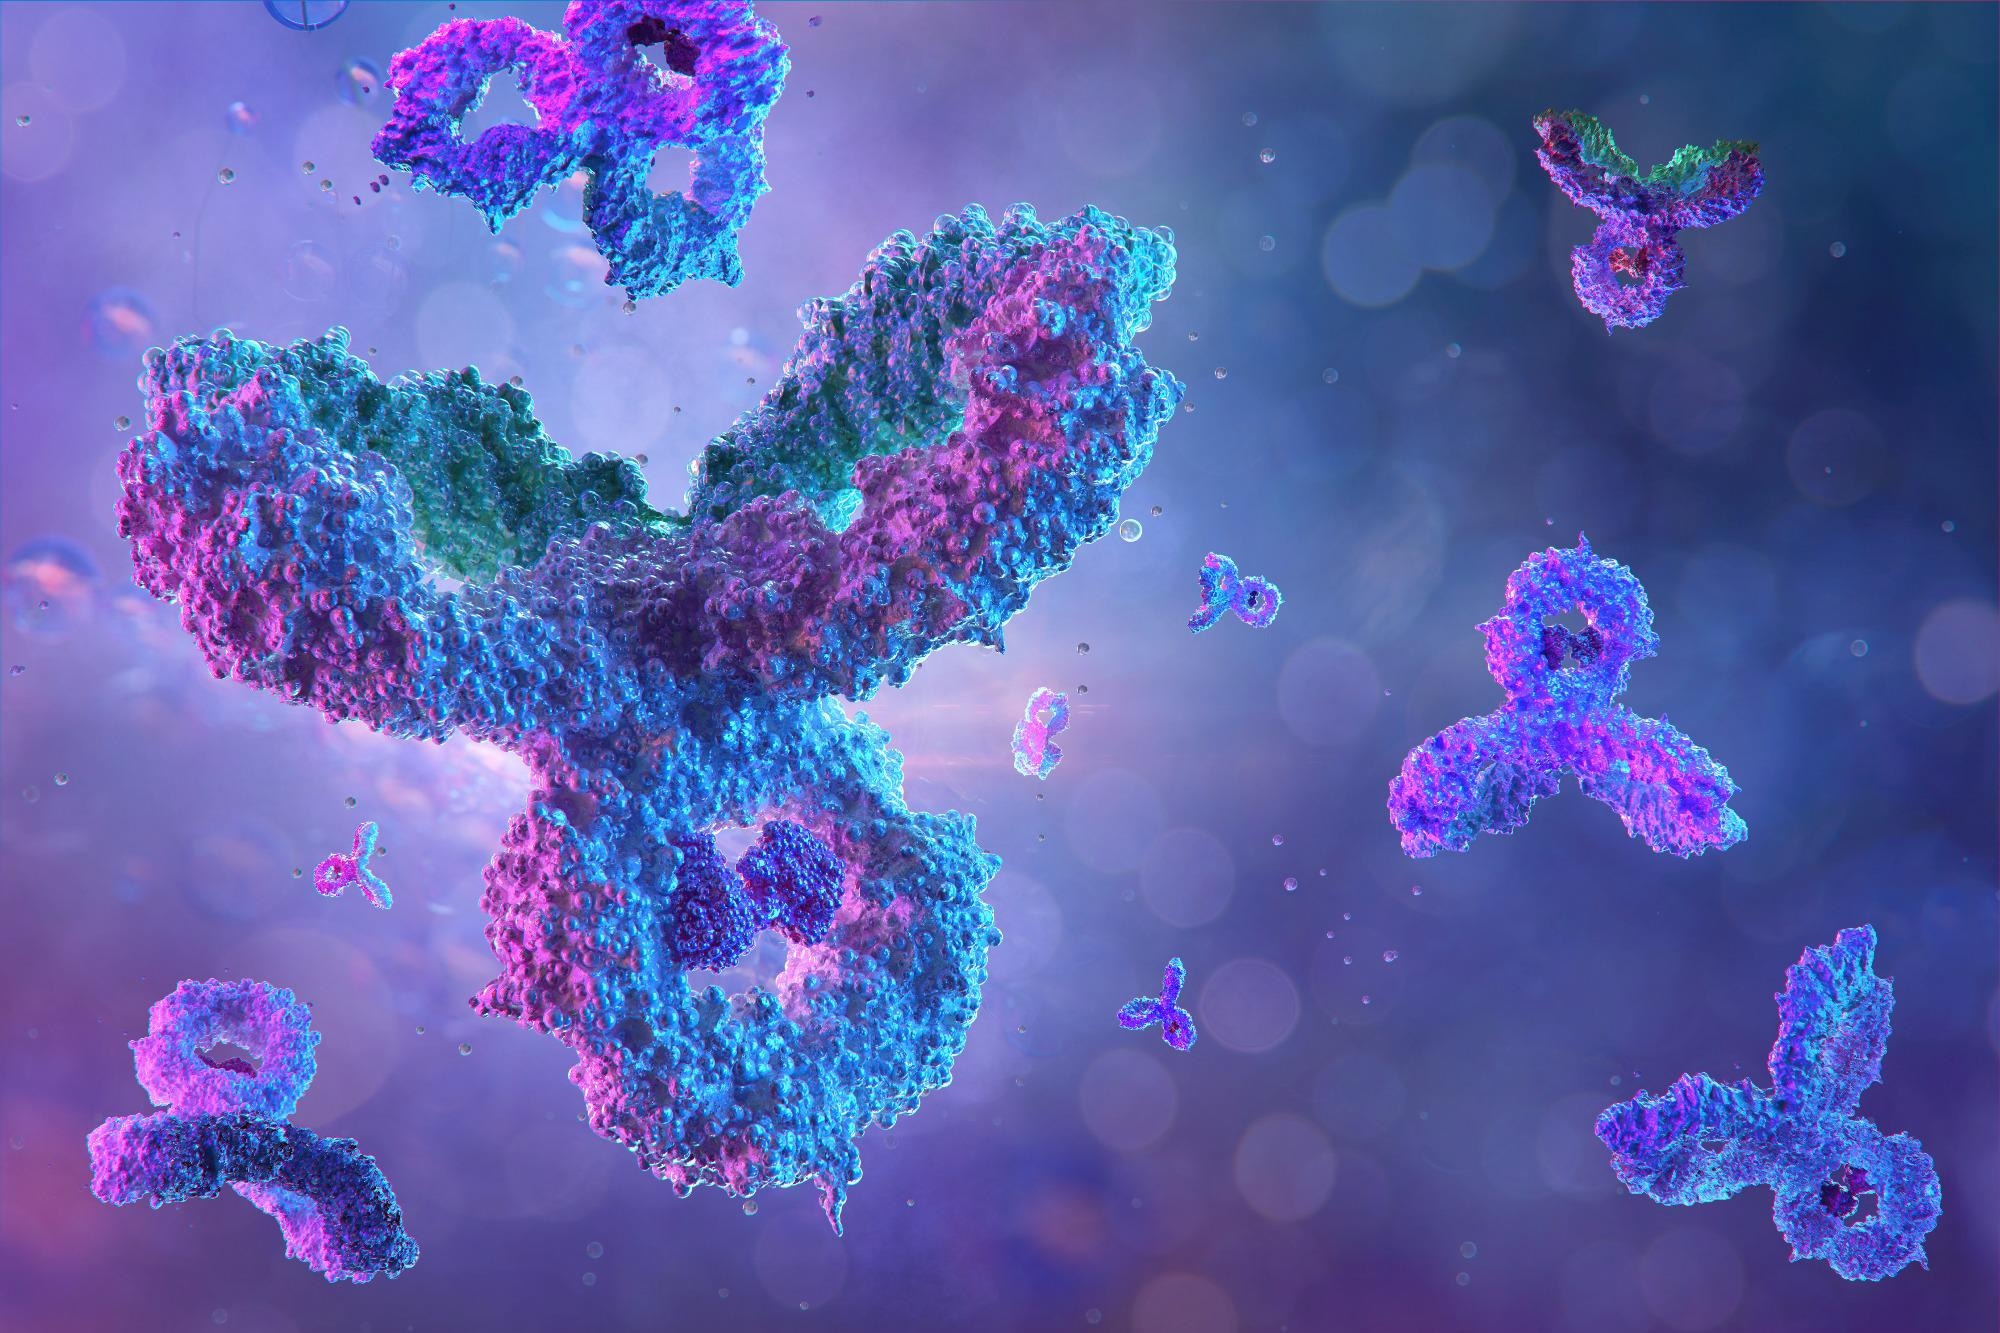 Study: Anti-chemokine antibodies after SARS-CoV-2 infection correlate with favorable disease course. Image Credit: Corona Borealis Studio / Shutterstock